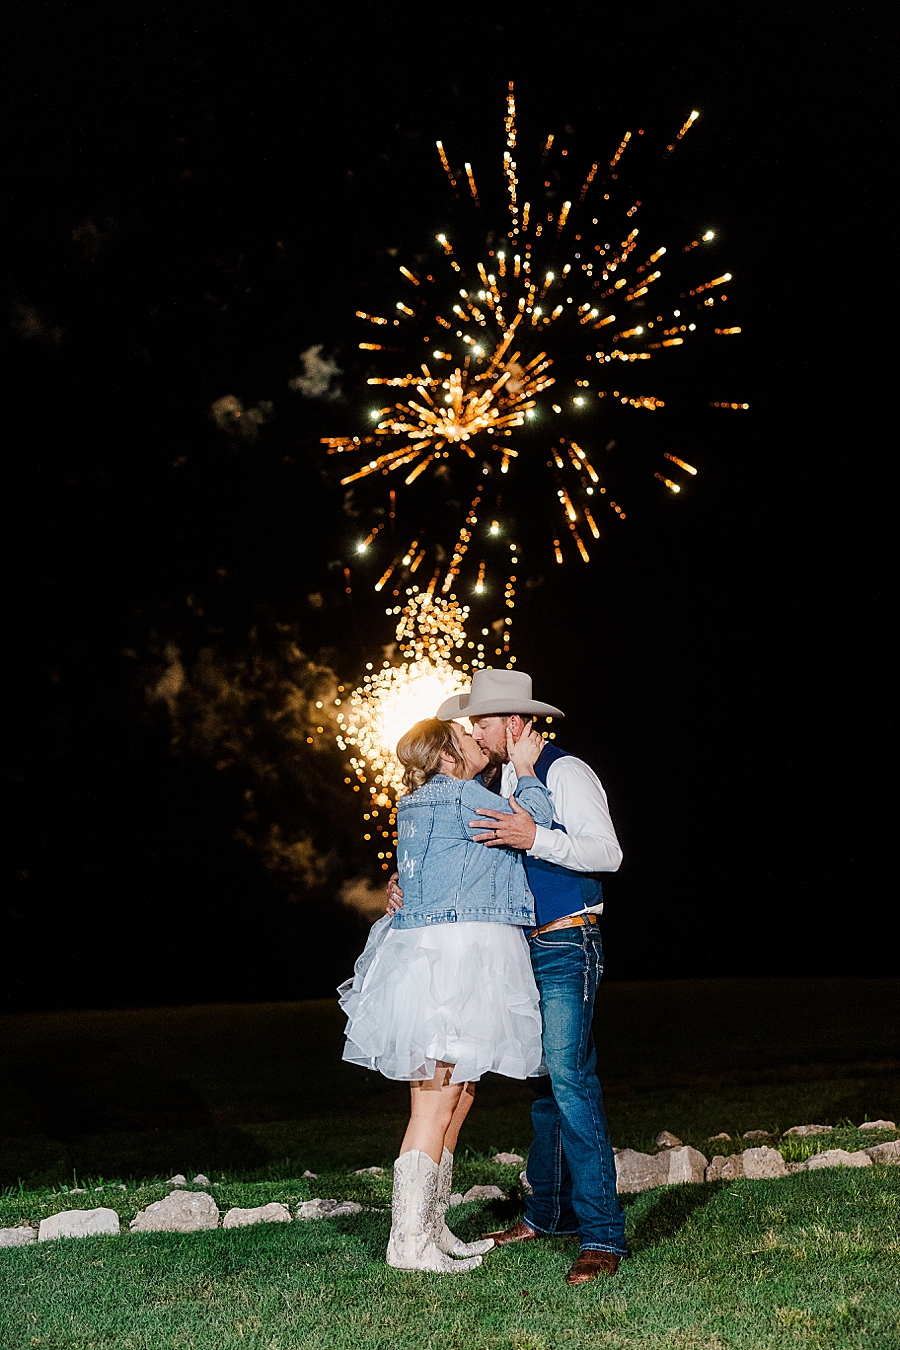 Bride and groom kiss under fireworks at wedding by Amanda May Photos